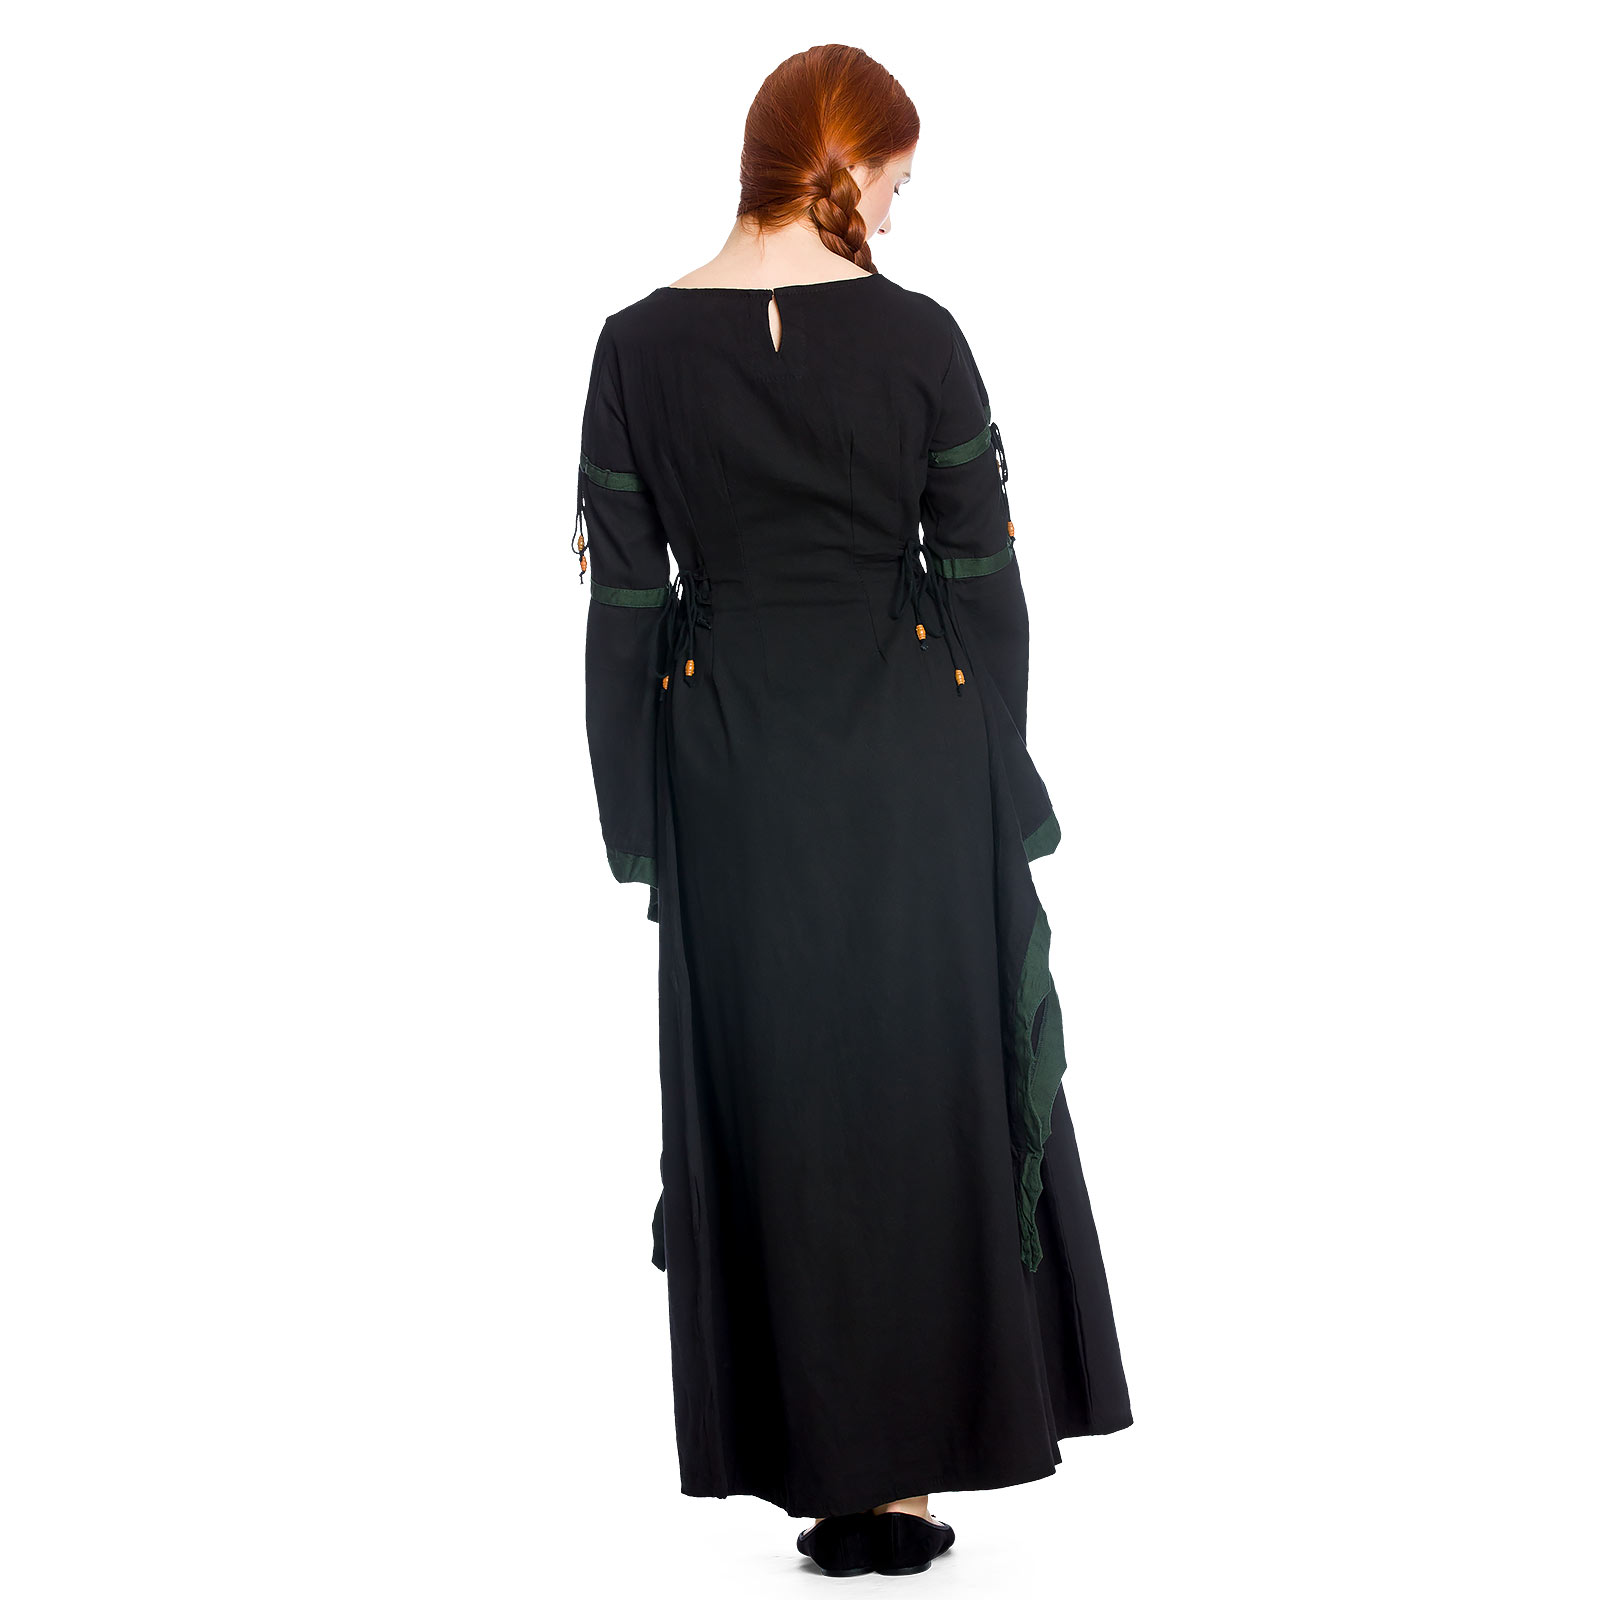 Leona - Medieval Dress Black-Green